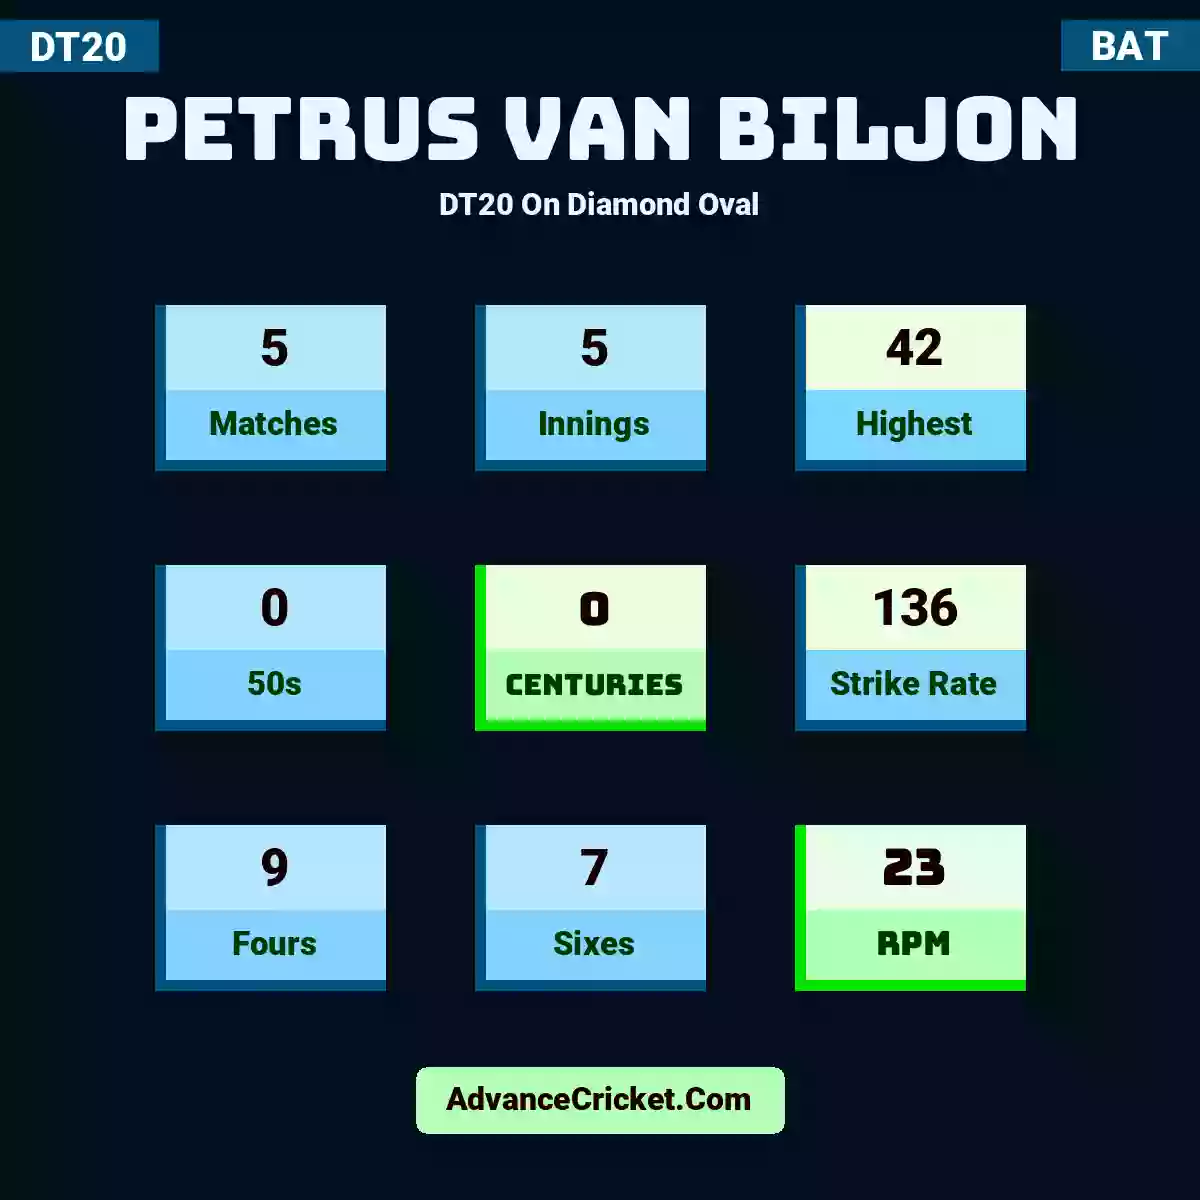 Petrus van Biljon DT20  On Diamond Oval, Petrus van Biljon played 5 matches, scored 42 runs as highest, 0 half-centuries, and 0 centuries, with a strike rate of 136. P.Biljon hit 9 fours and 7 sixes, with an RPM of 23.